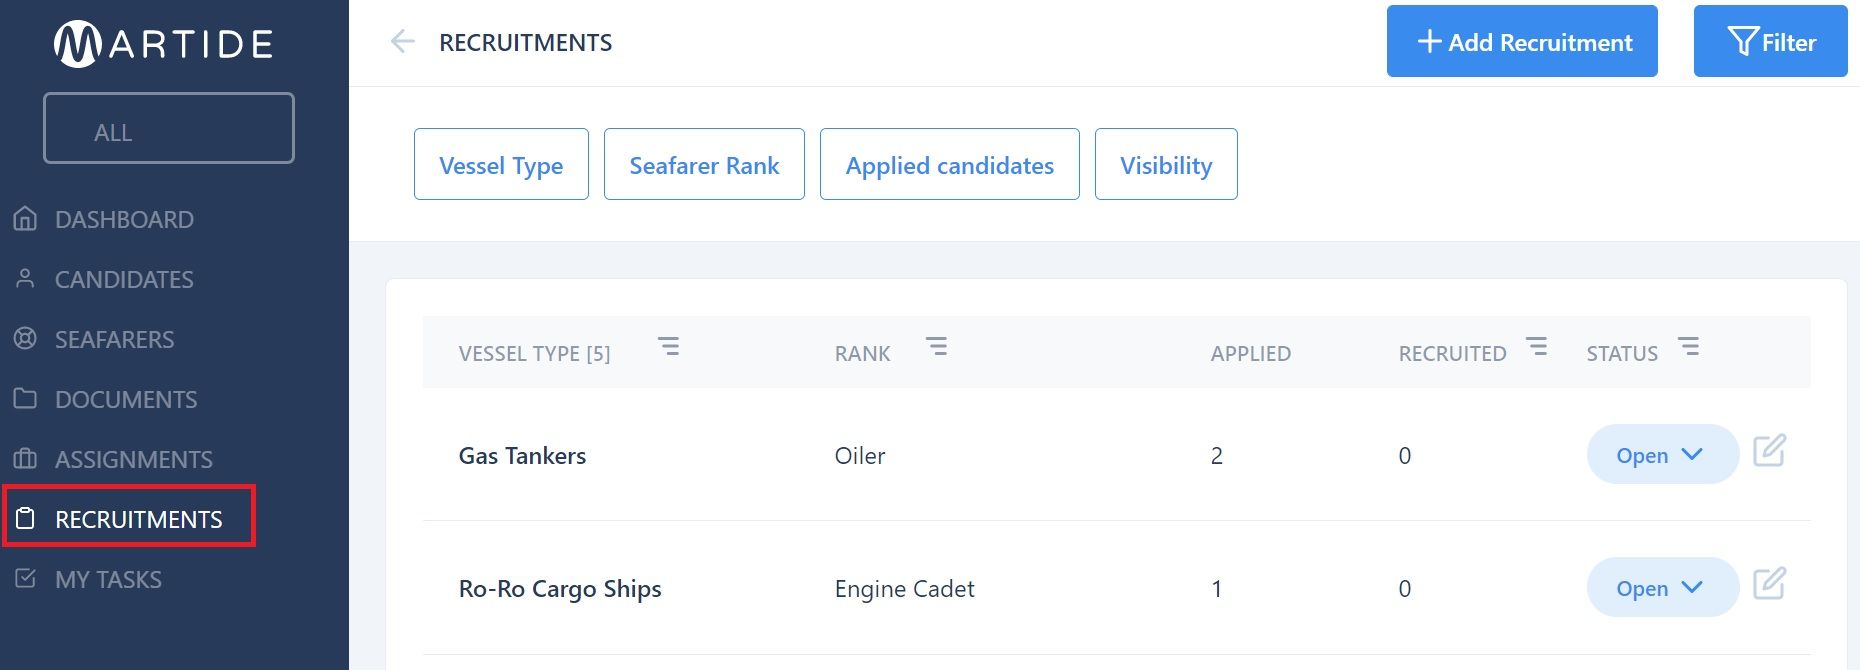 Screenshot of Martide's maritime recruitment and crewing system platform